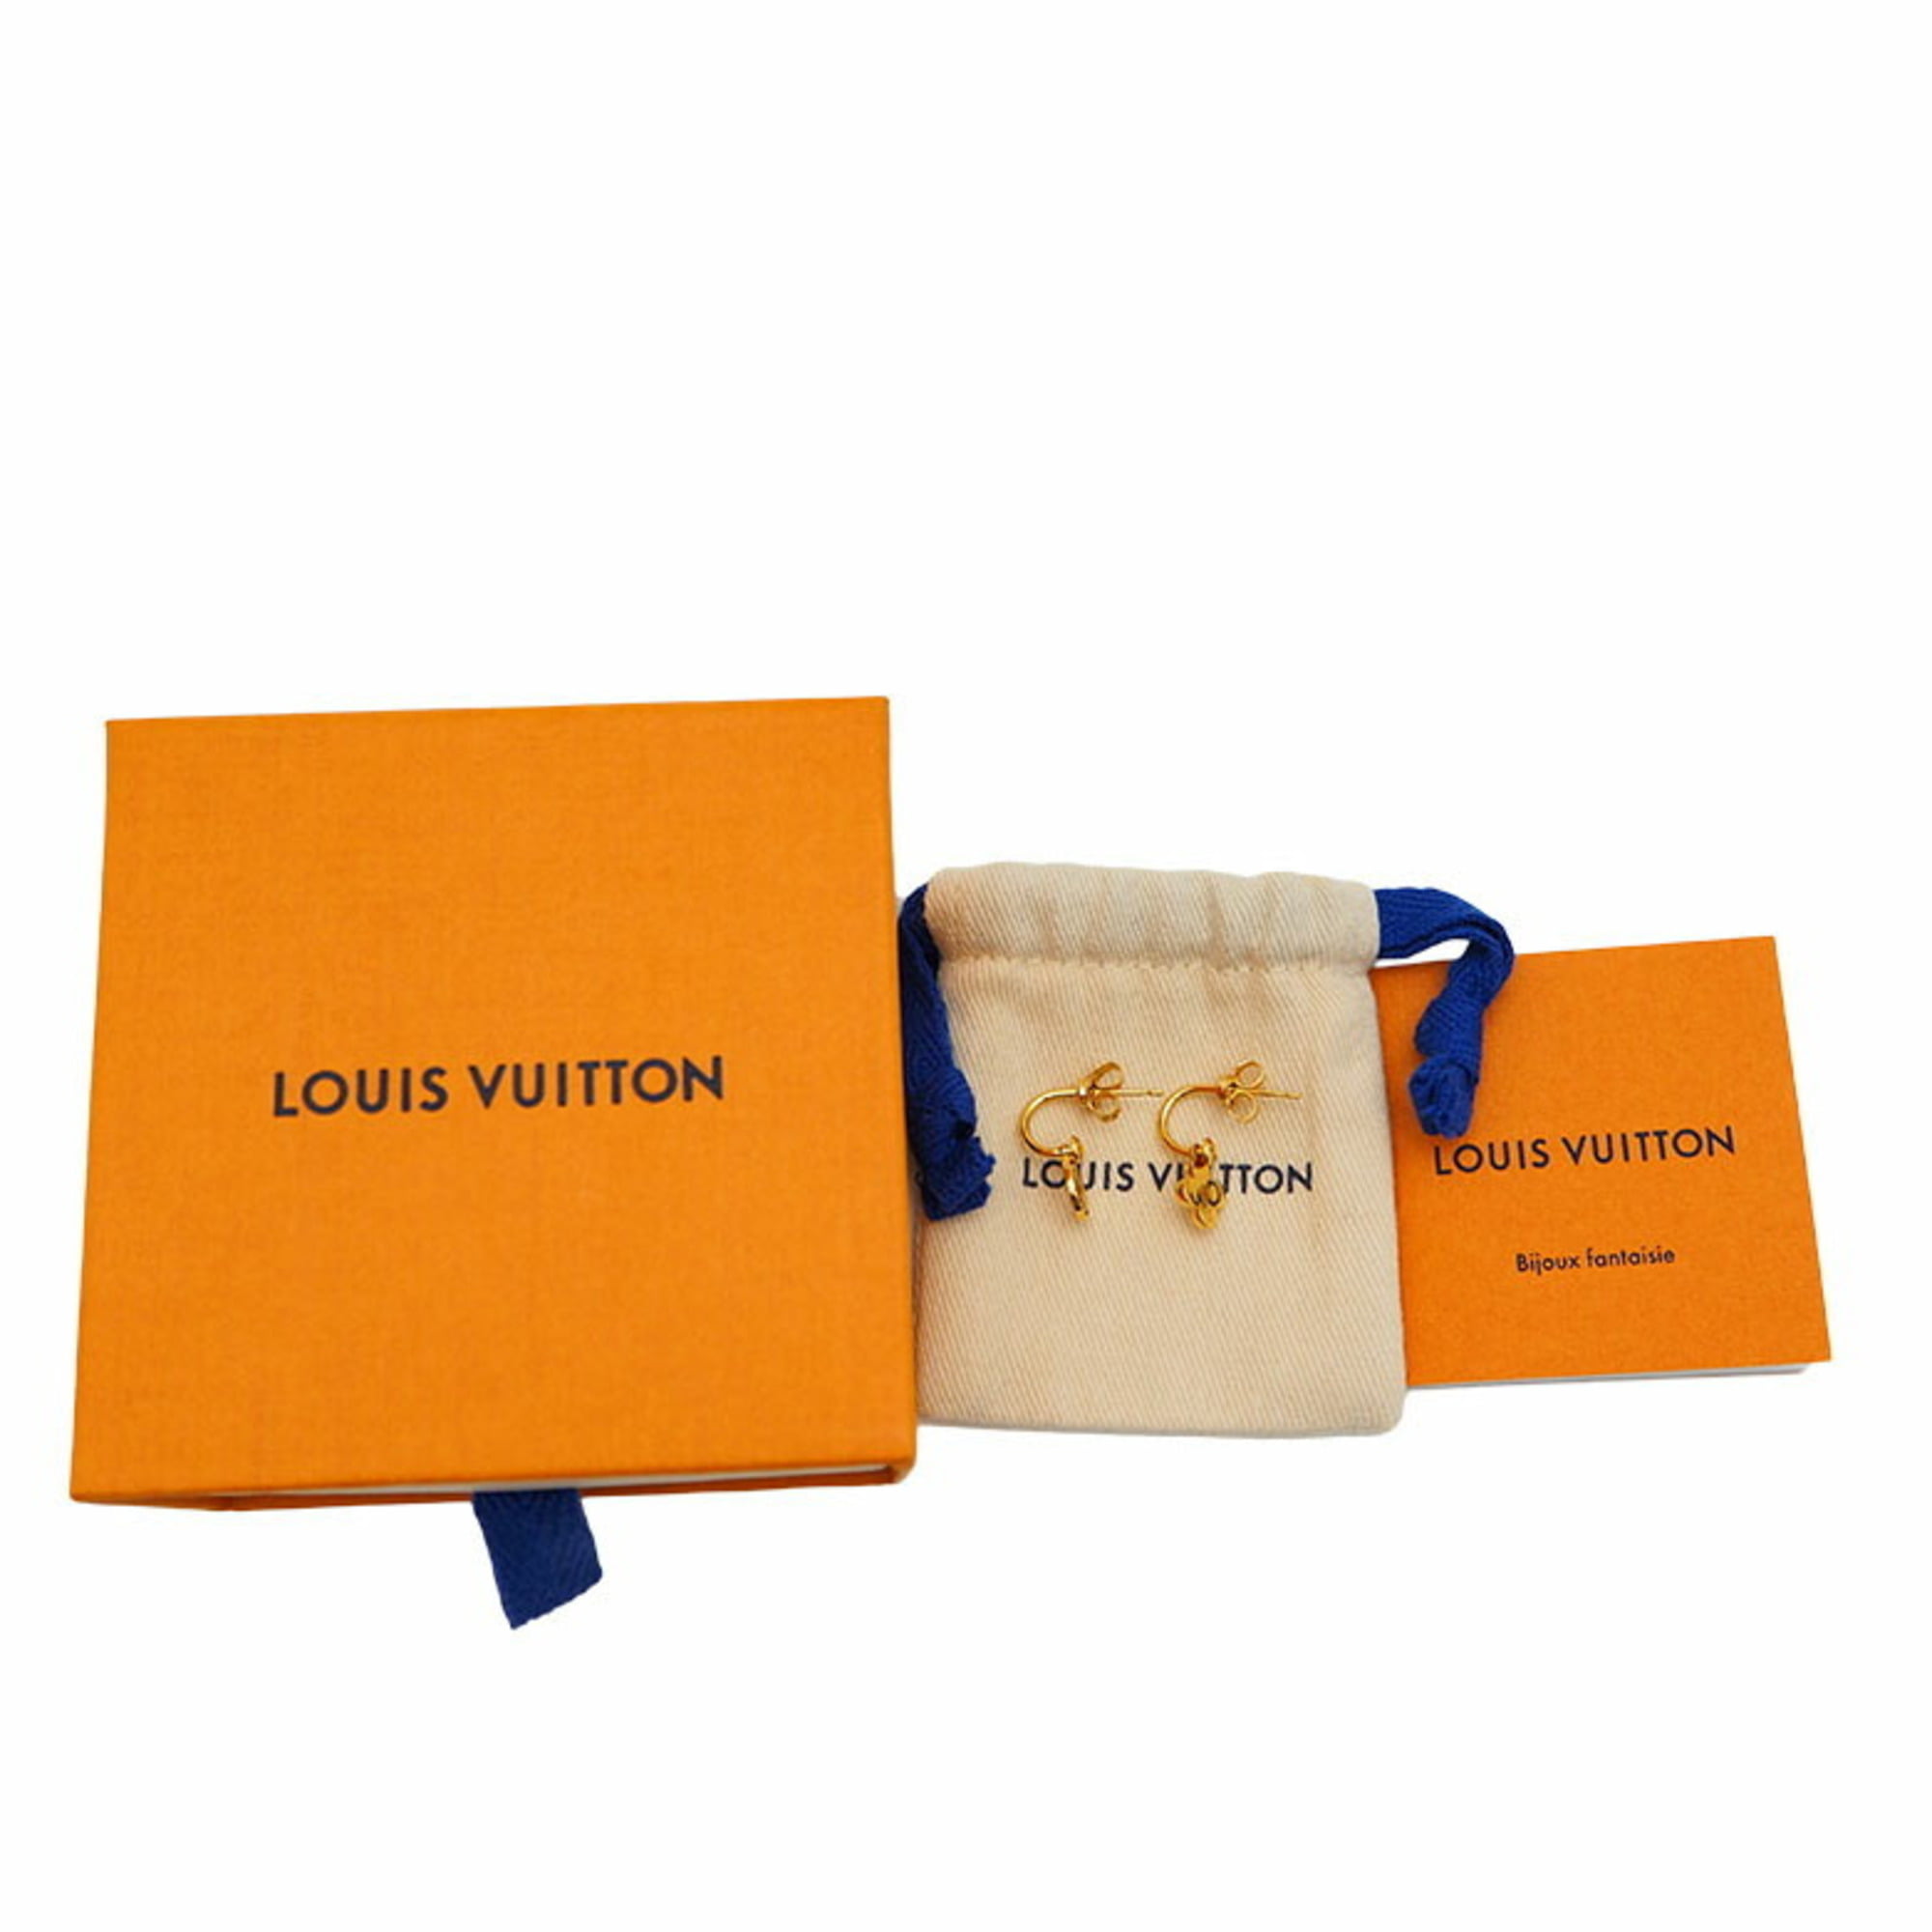 LOUIS VUITTON Flower earring Gold plate Gold Earring 300030201